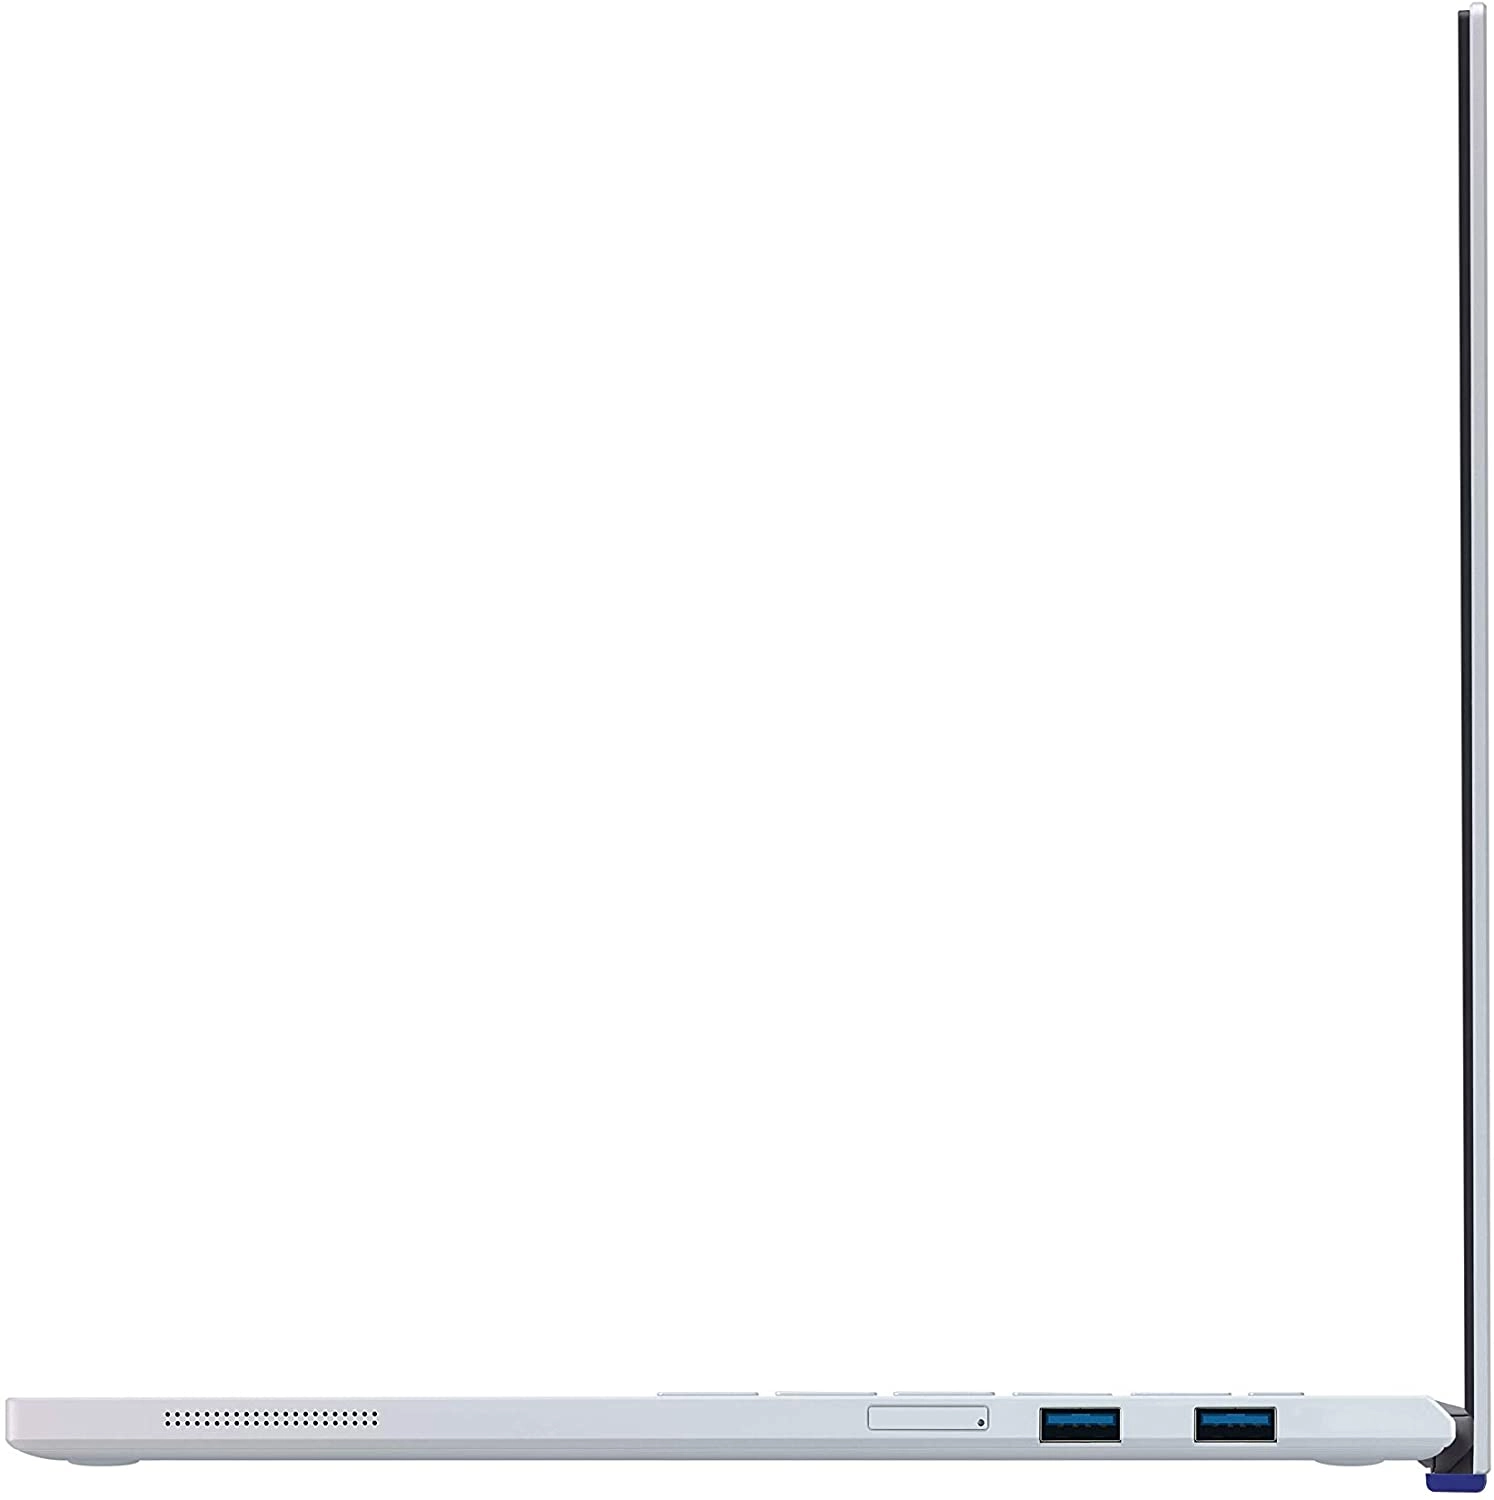 Samsung Galaxy Book Ion laptop image